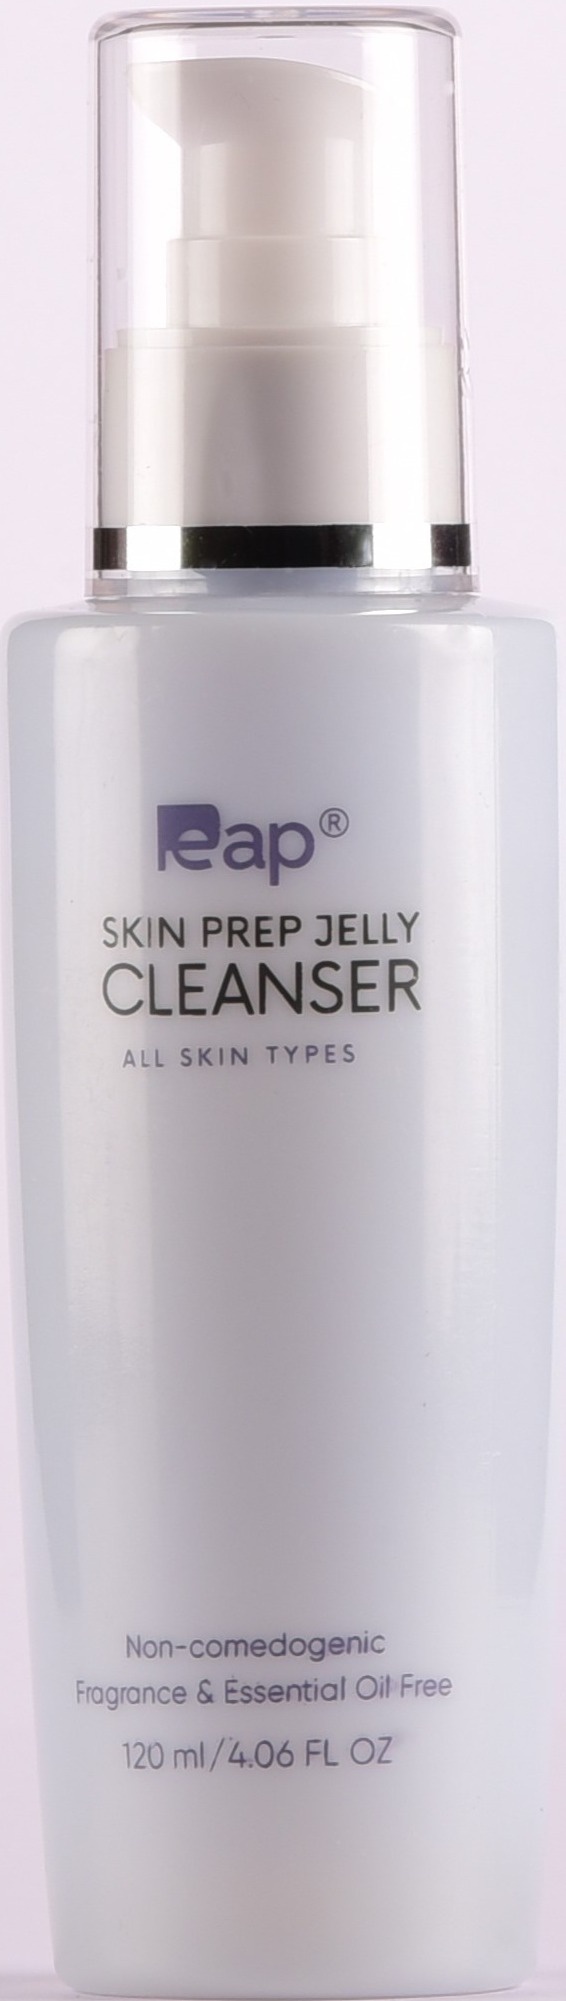 Reap Skincare Skin Prep Jelly Cleanser